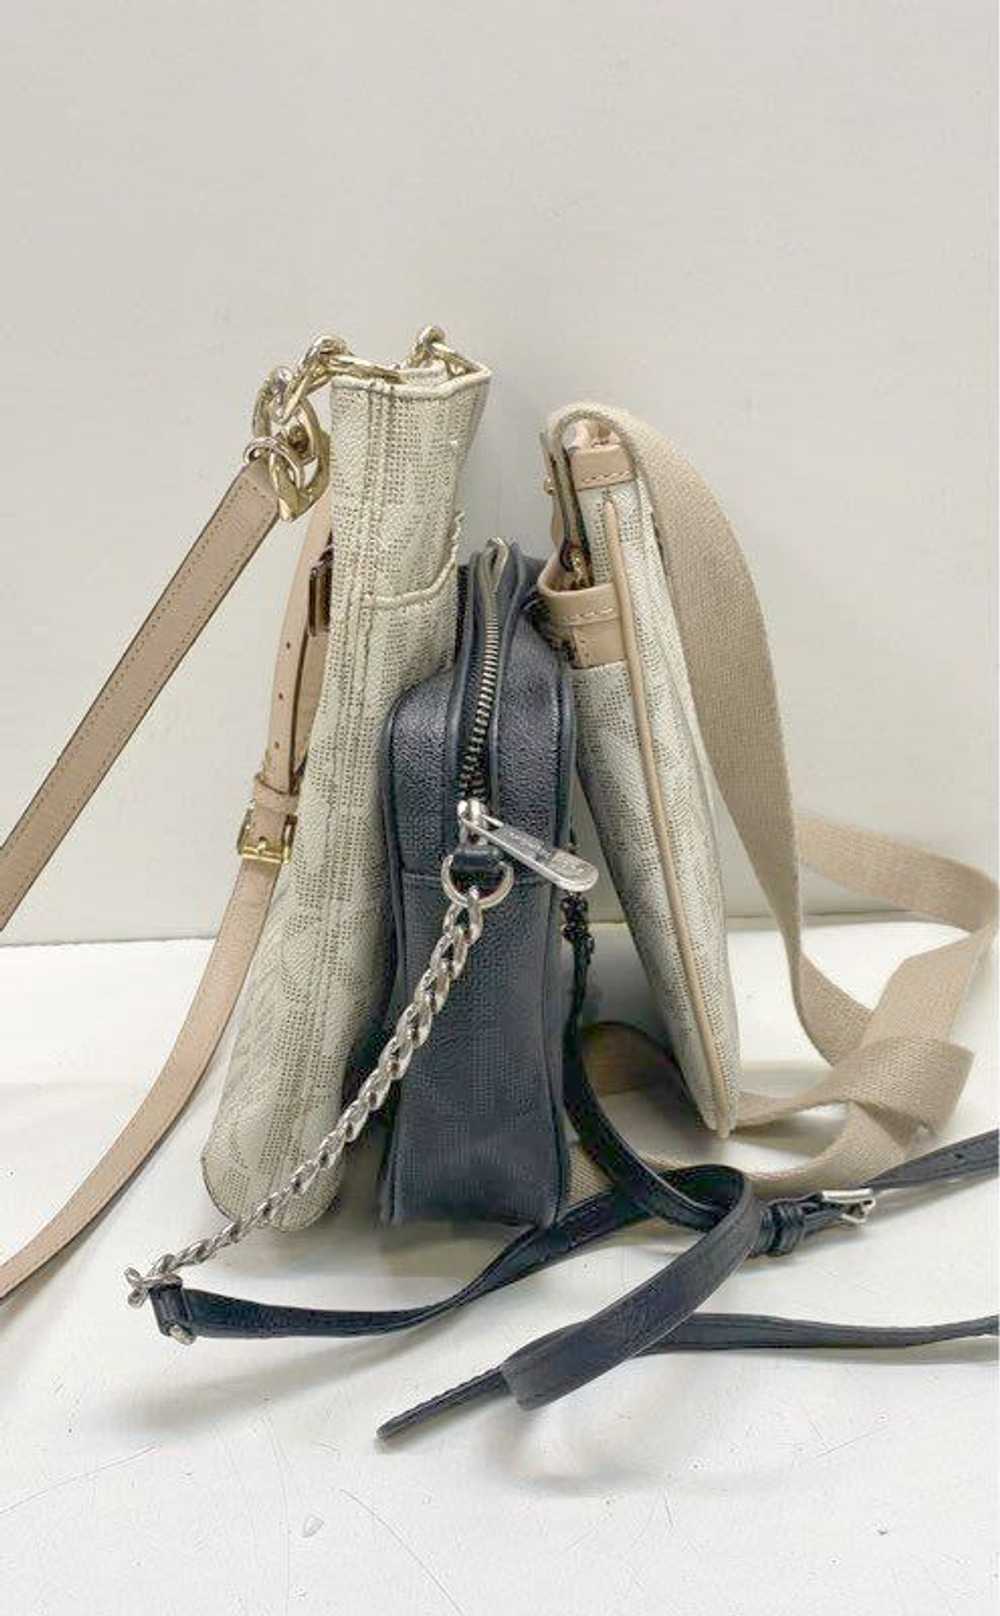 Michael Kors Assorted Bundle Lot Set of 3 Handbags - image 5